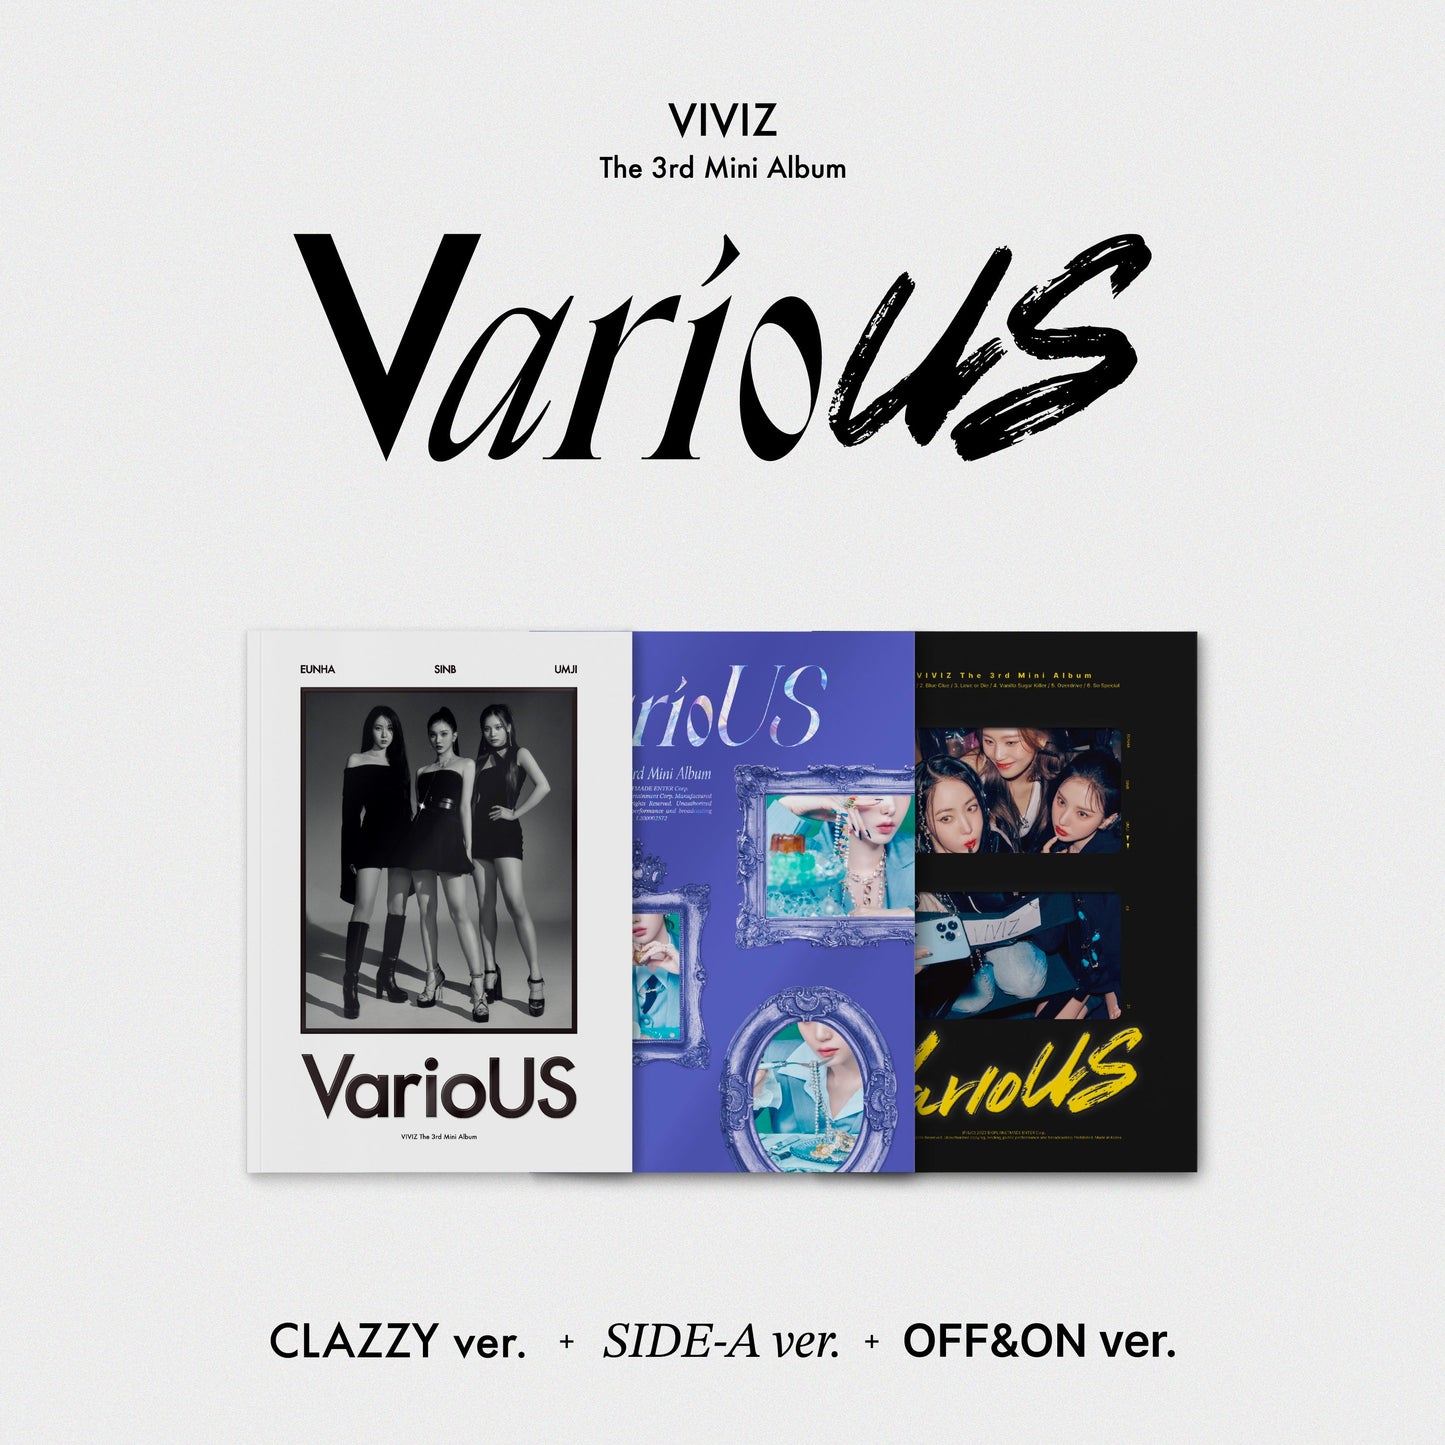 VIVIZ 3RD MINI ALBUM 'VARIOUS' (PHOTOBOOK) SET COVER